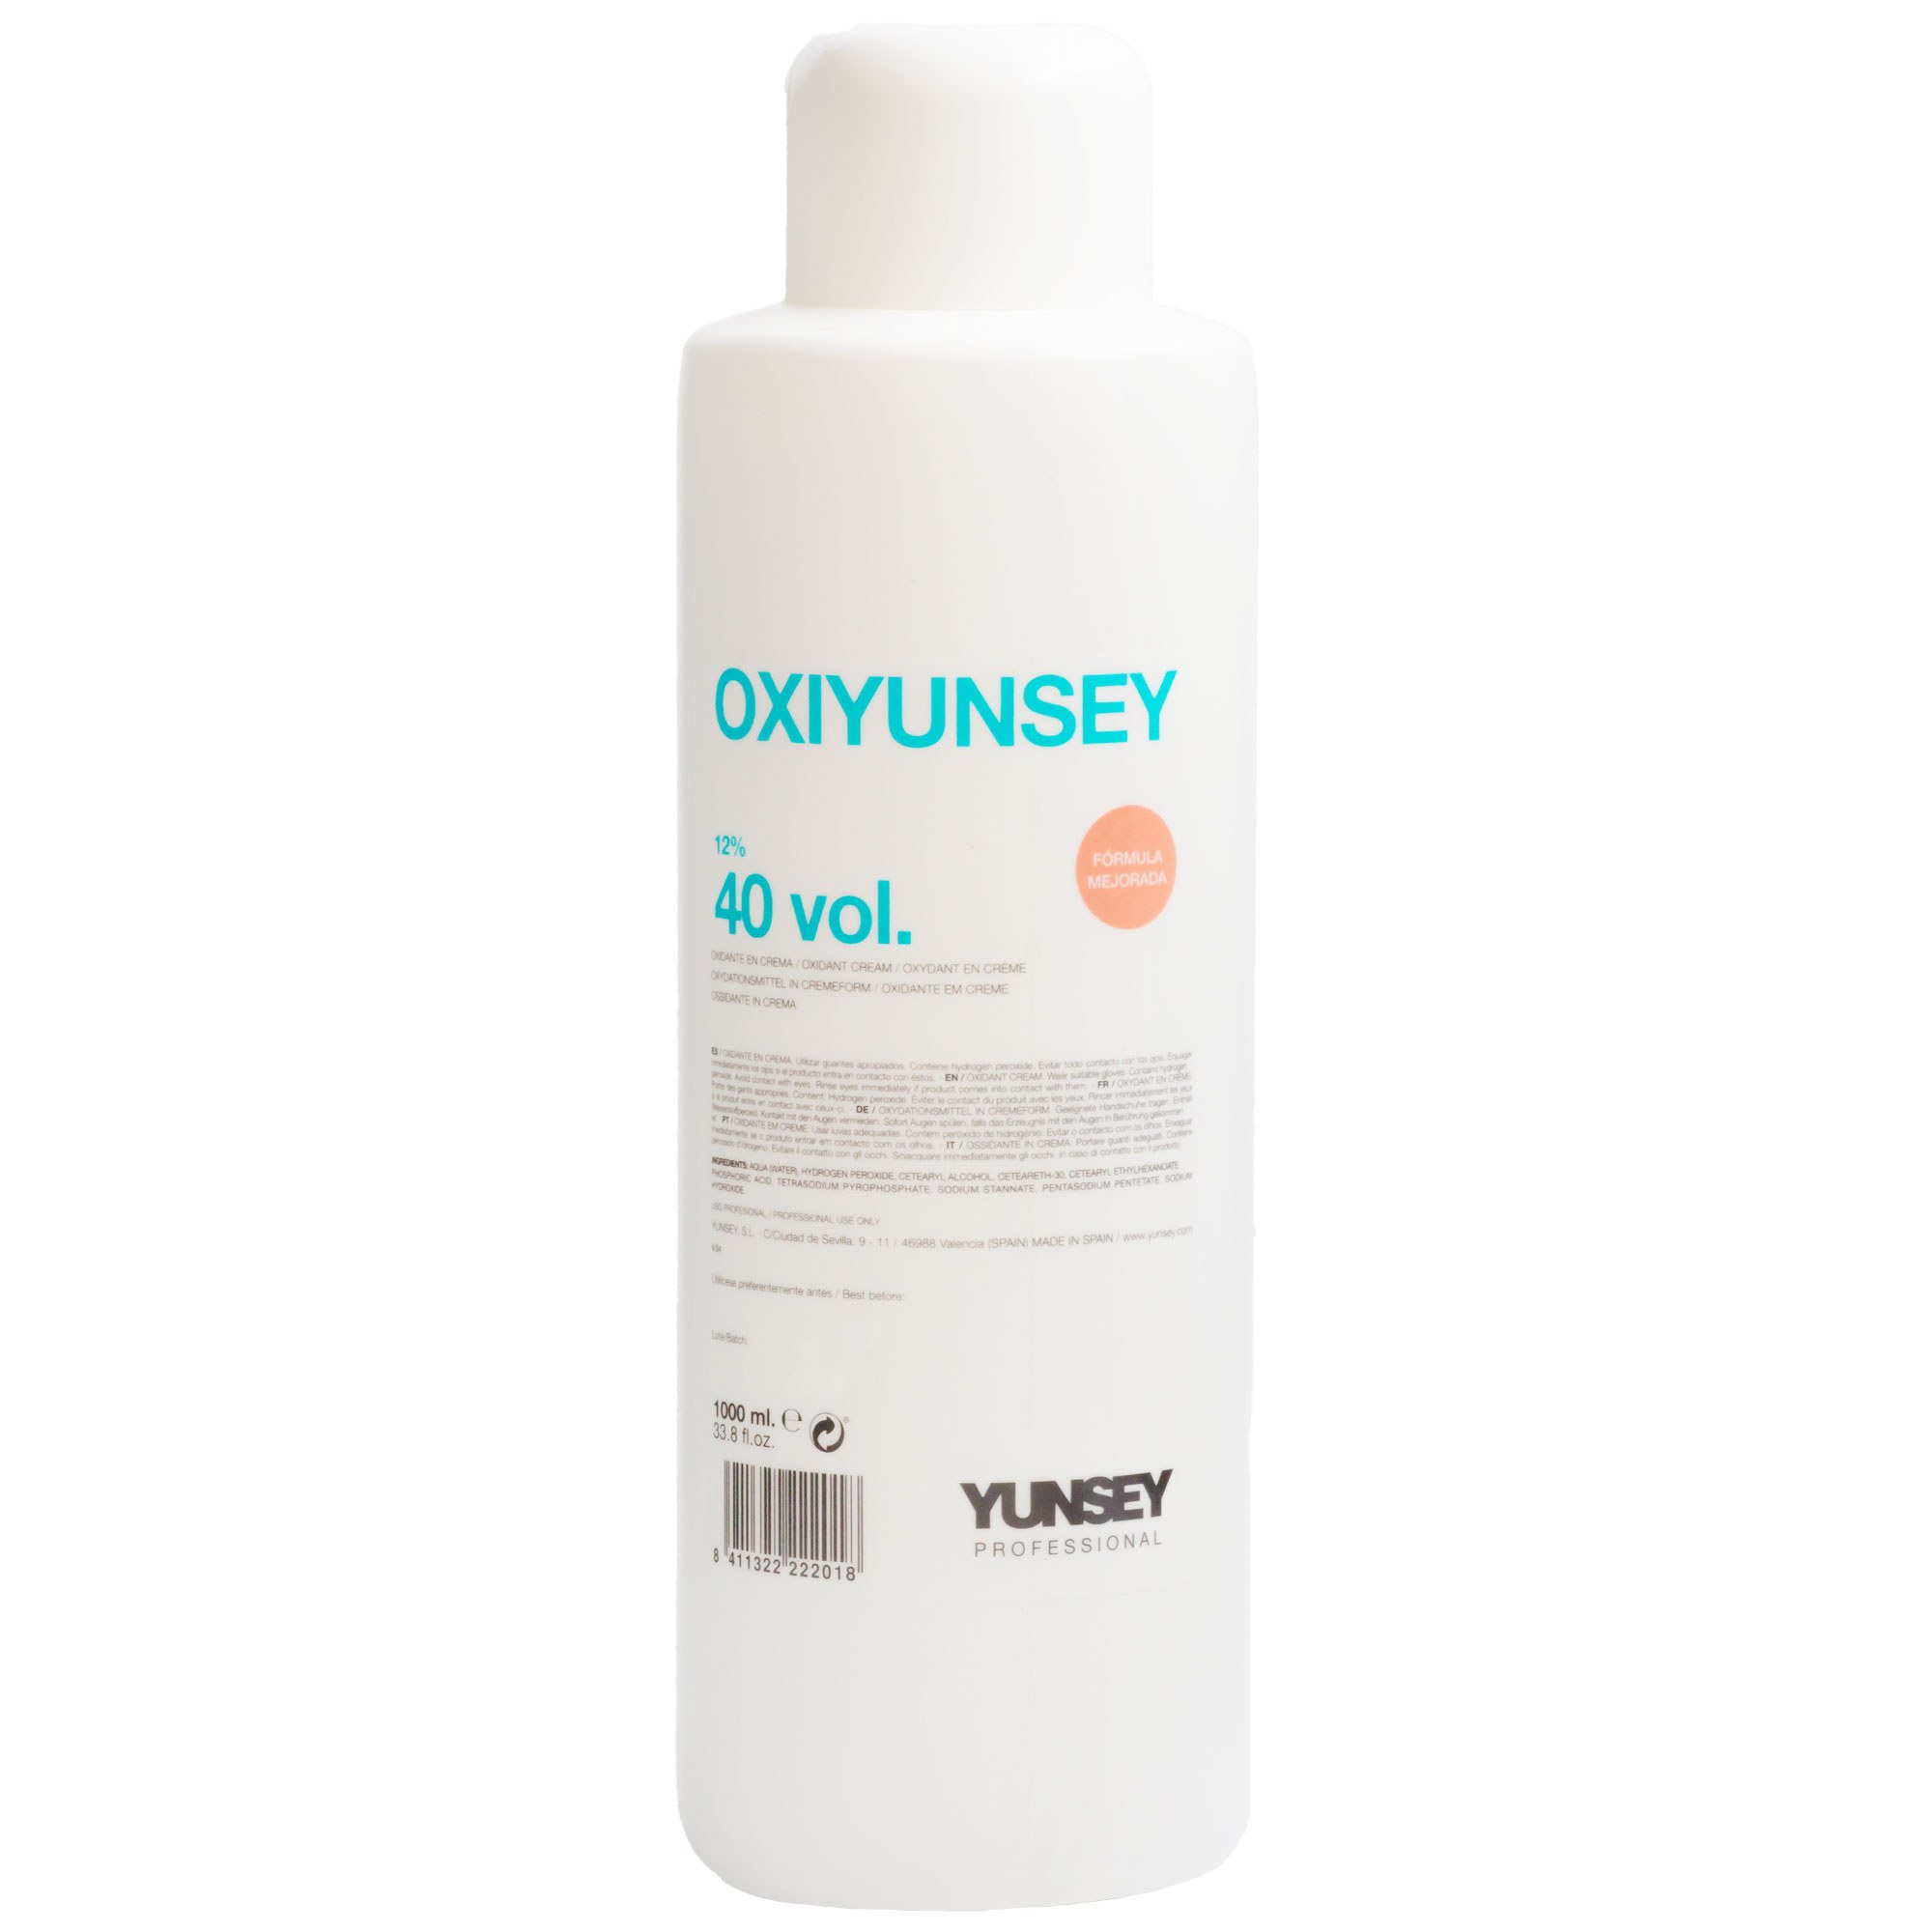 Yunsey Professional OXIYUNSEY Developer 40 Volume